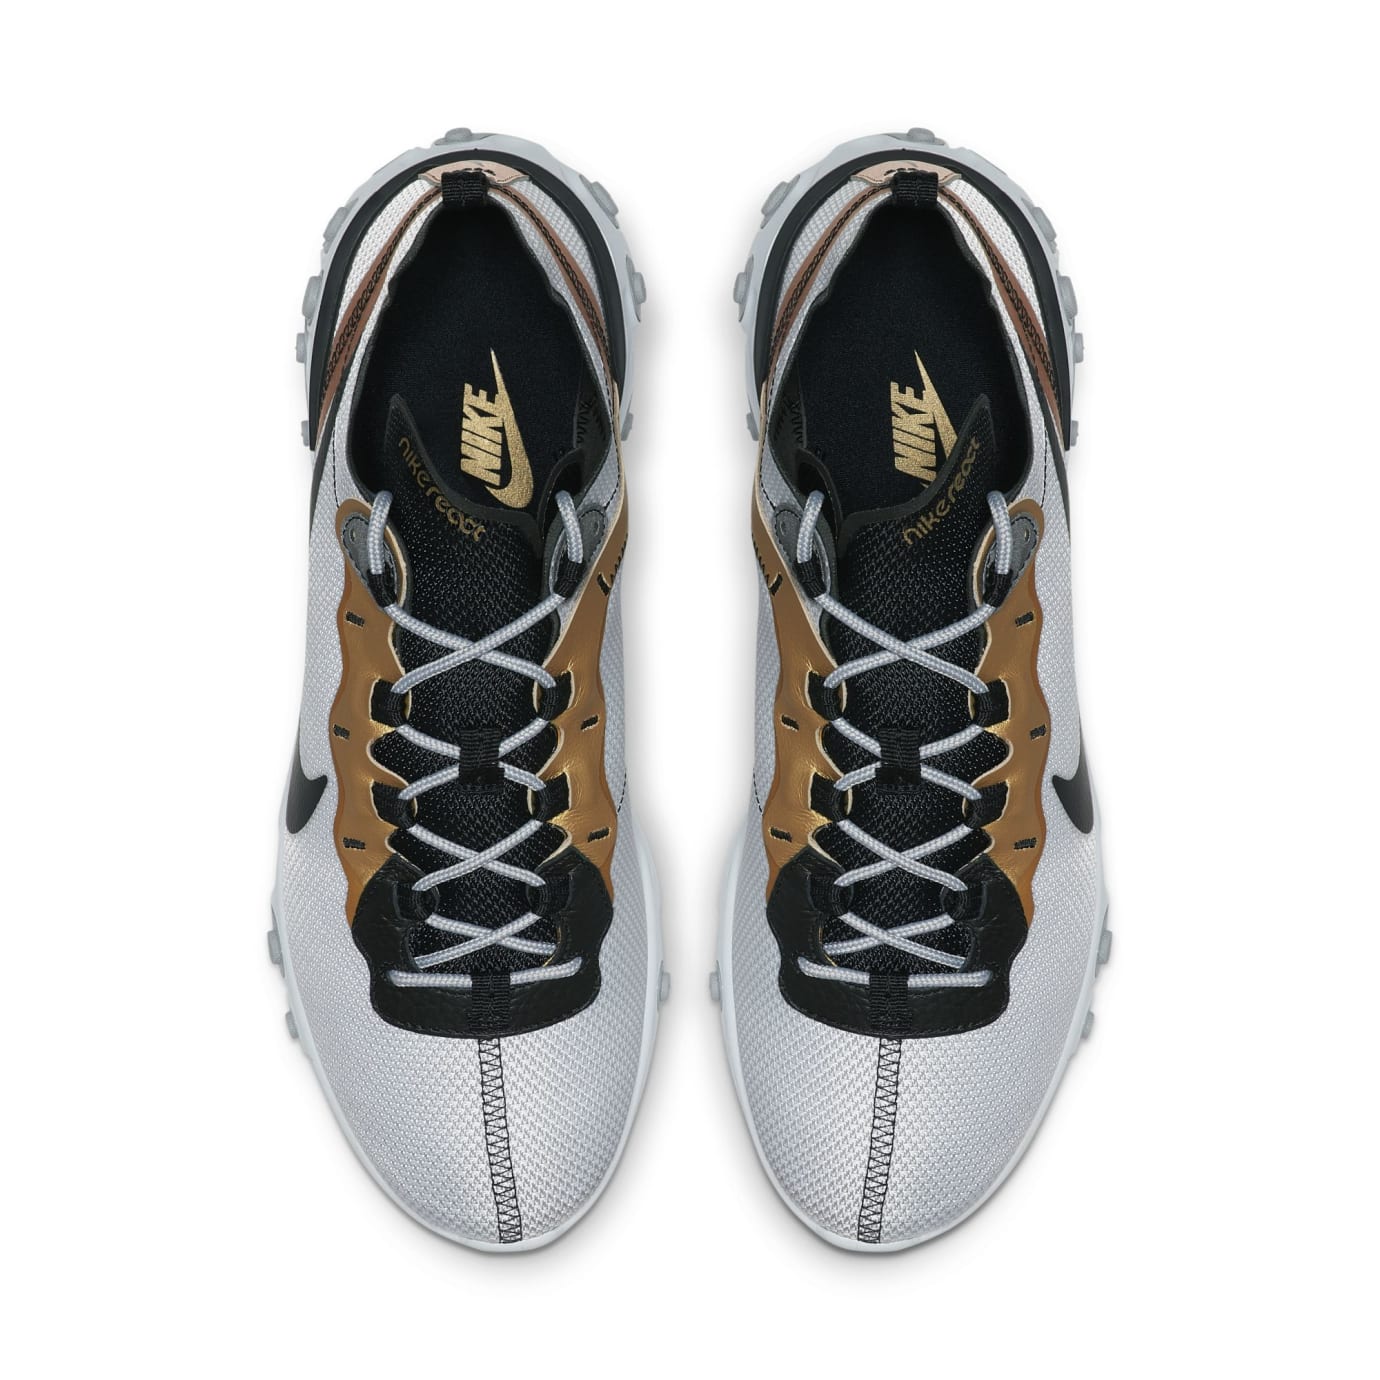 somewhere Flourish Persuasion Nike React Element React 55 'Light Grey/Black-Metallic Gold' Release Date |  Sole Collector